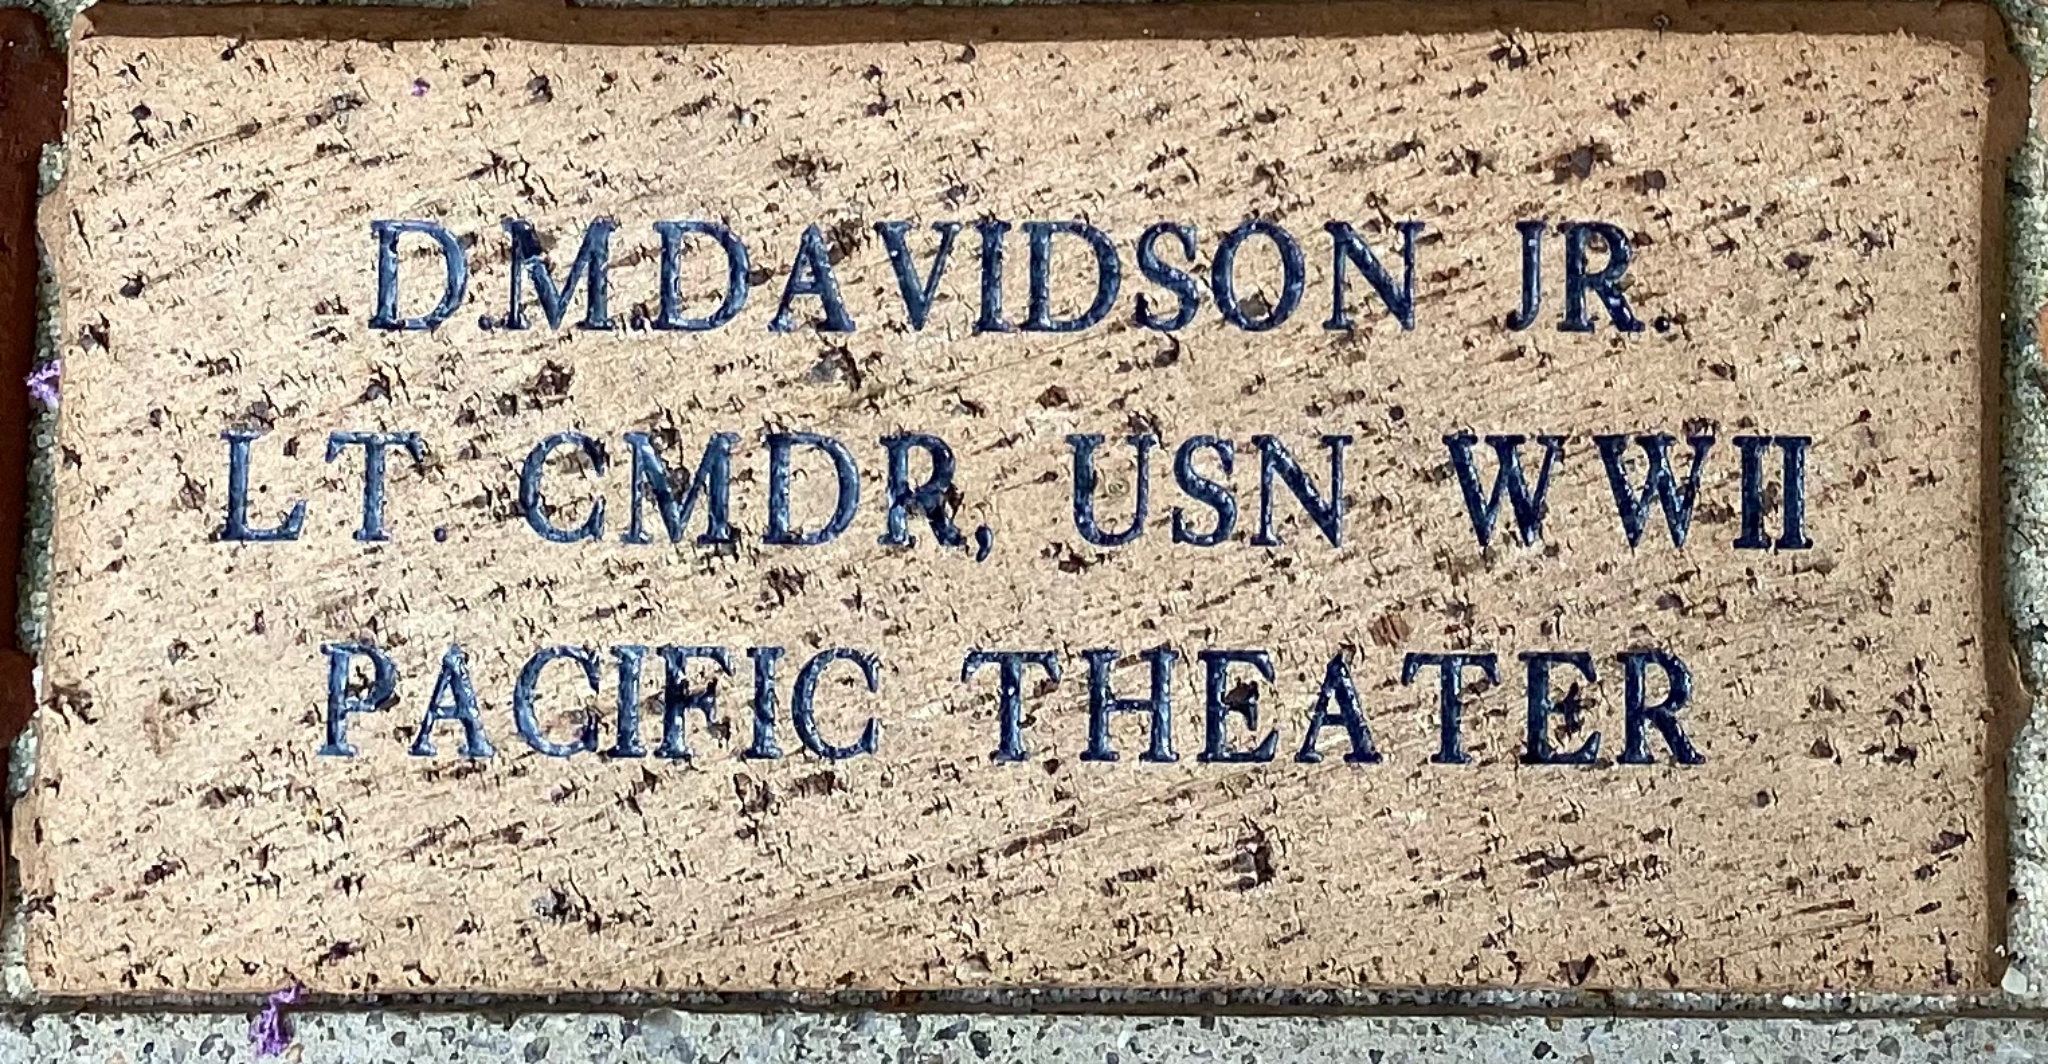 D.M. DAVIDSON JR. LT. CMDR., USN WWII PACIFIC THEATER